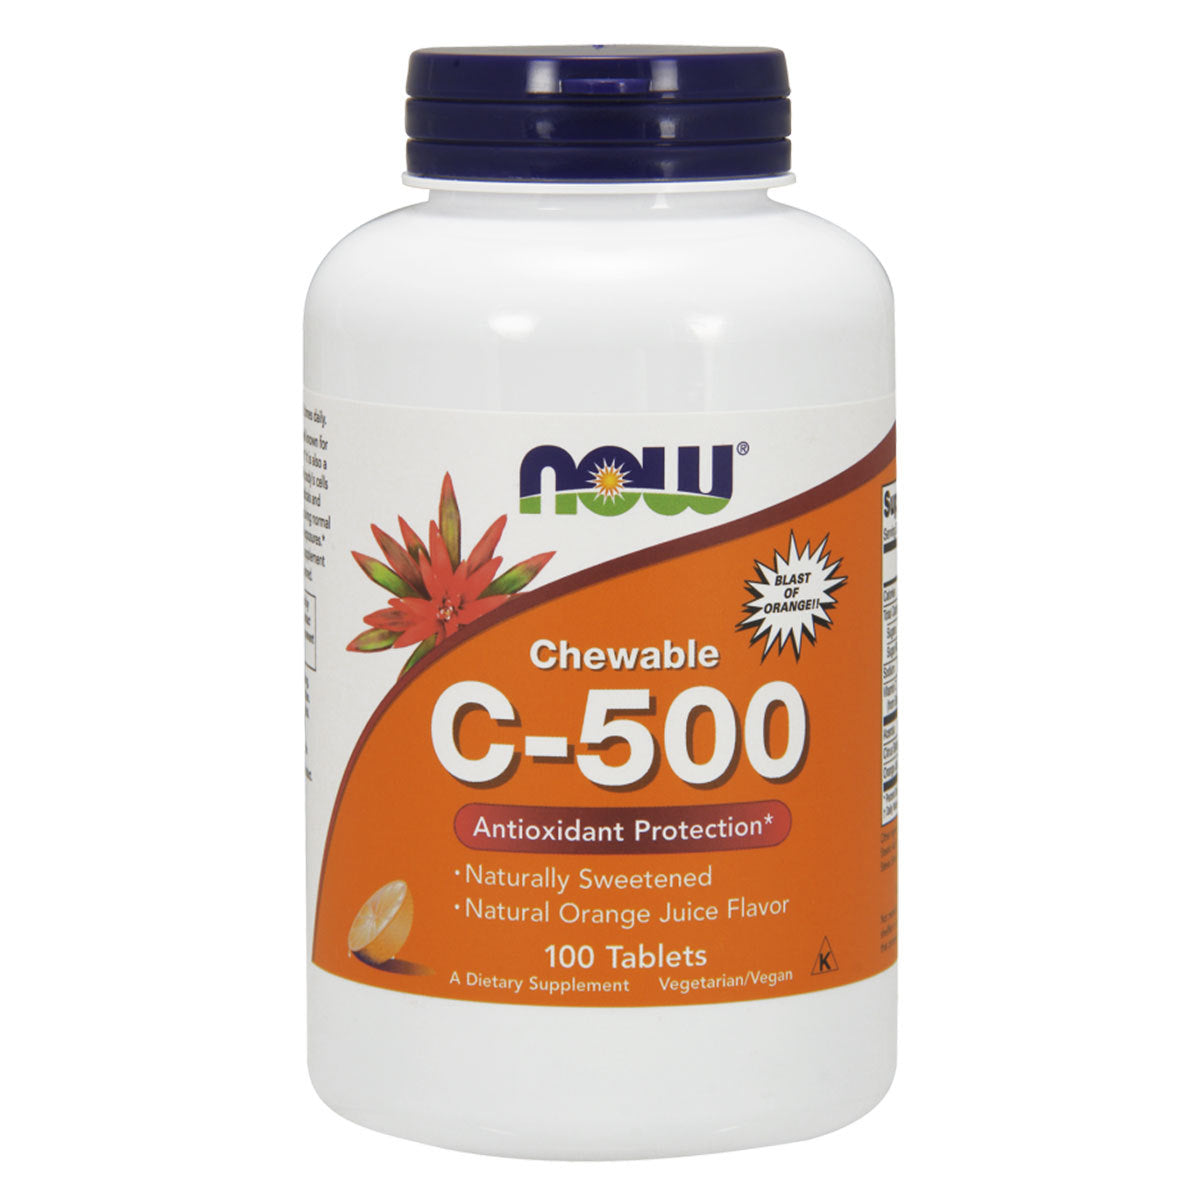 Primary image of Vitamin C-500 Orange Chewable Tablets